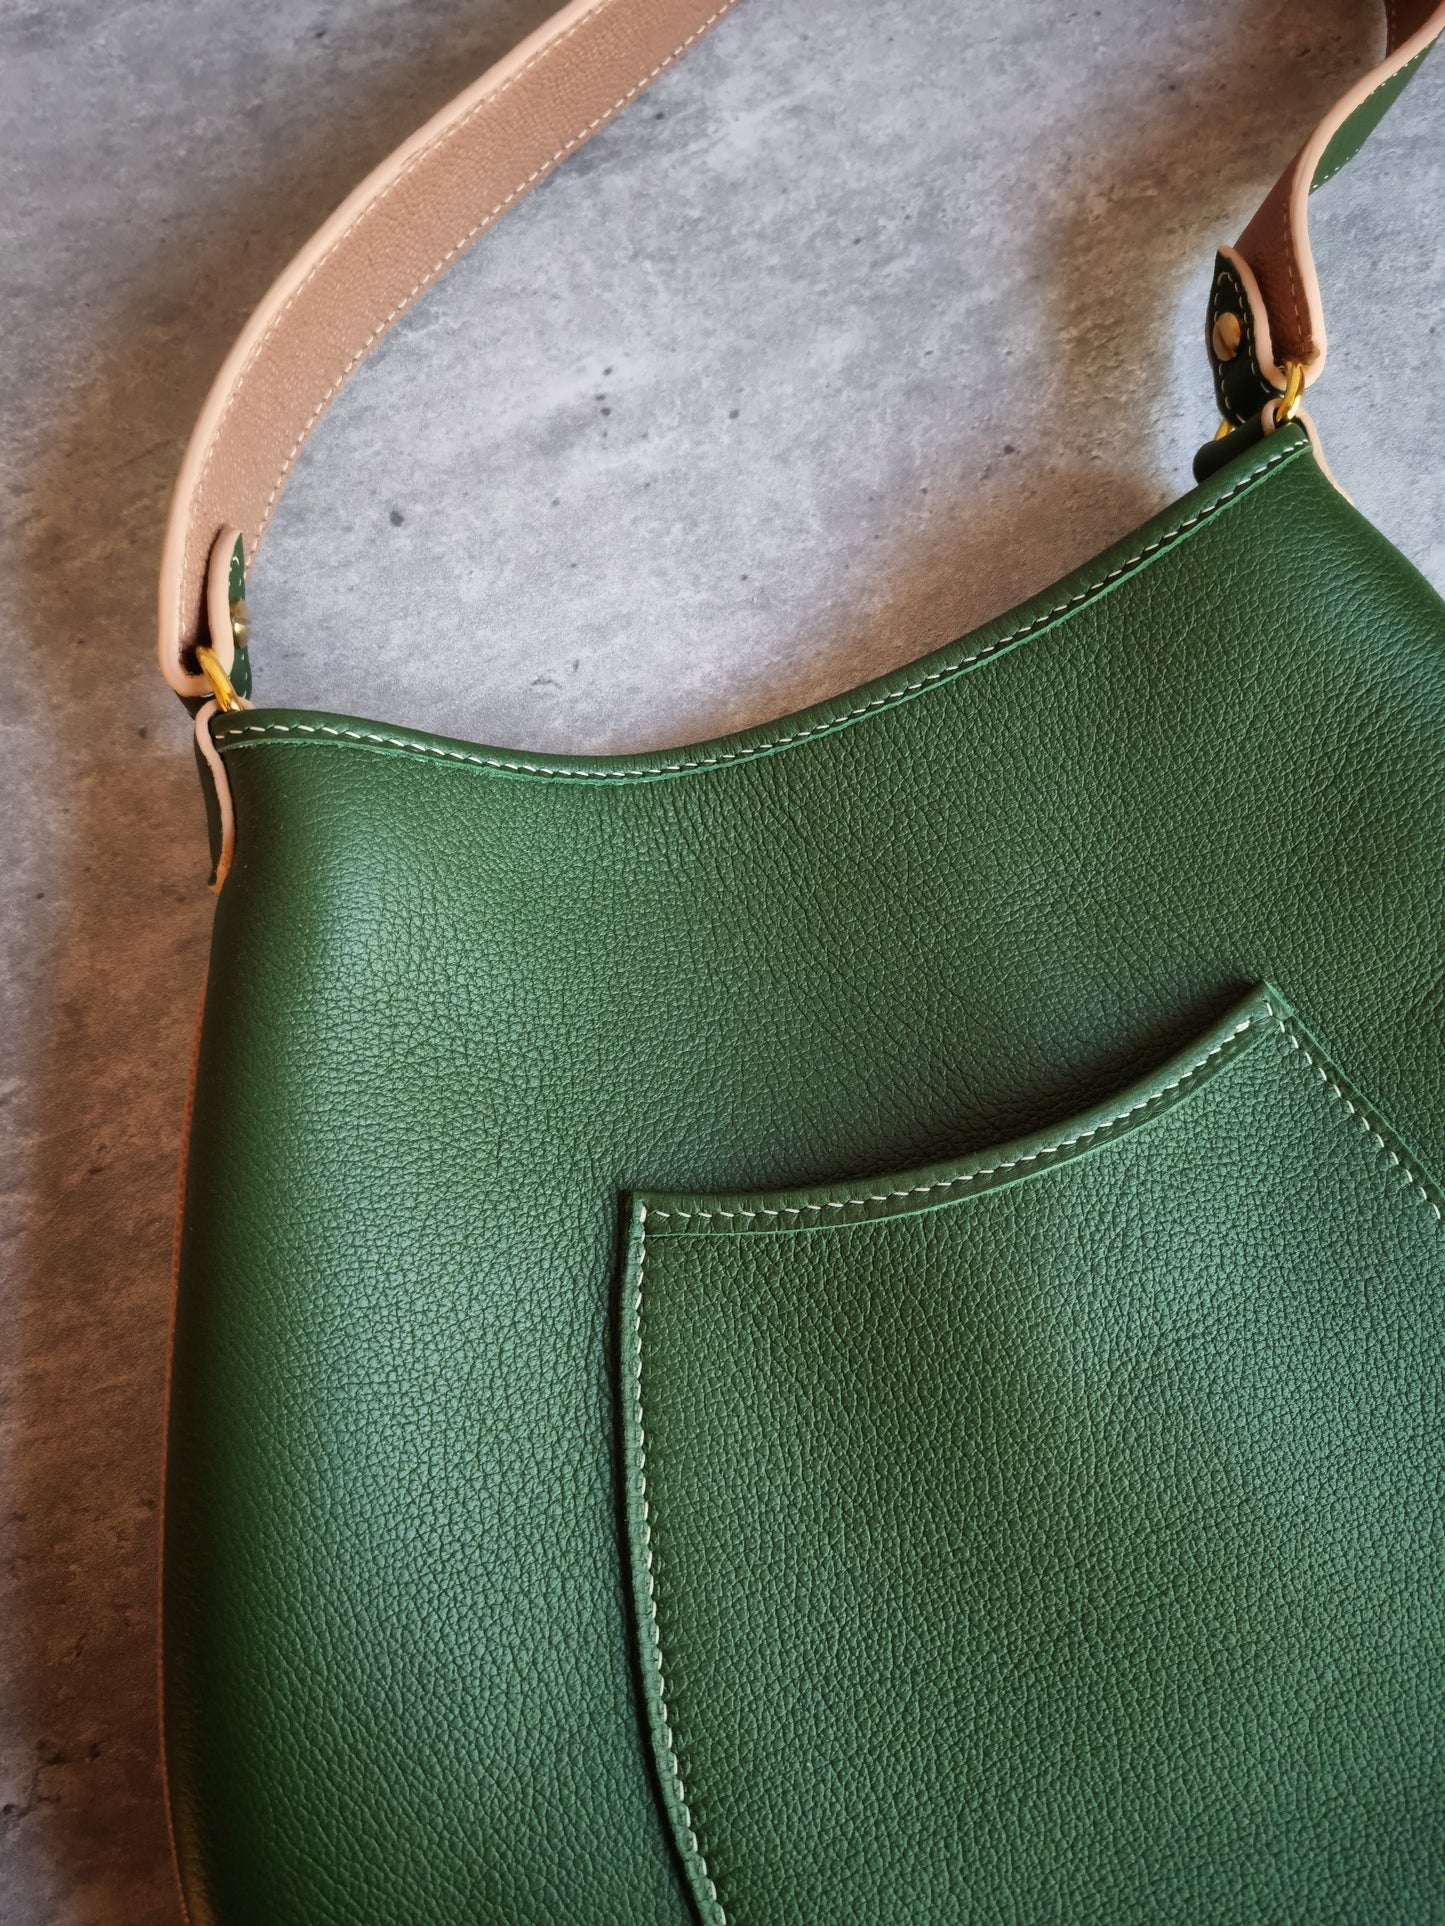 The Hobo handbag | DIY | Pattern Pdf | Leather craft template